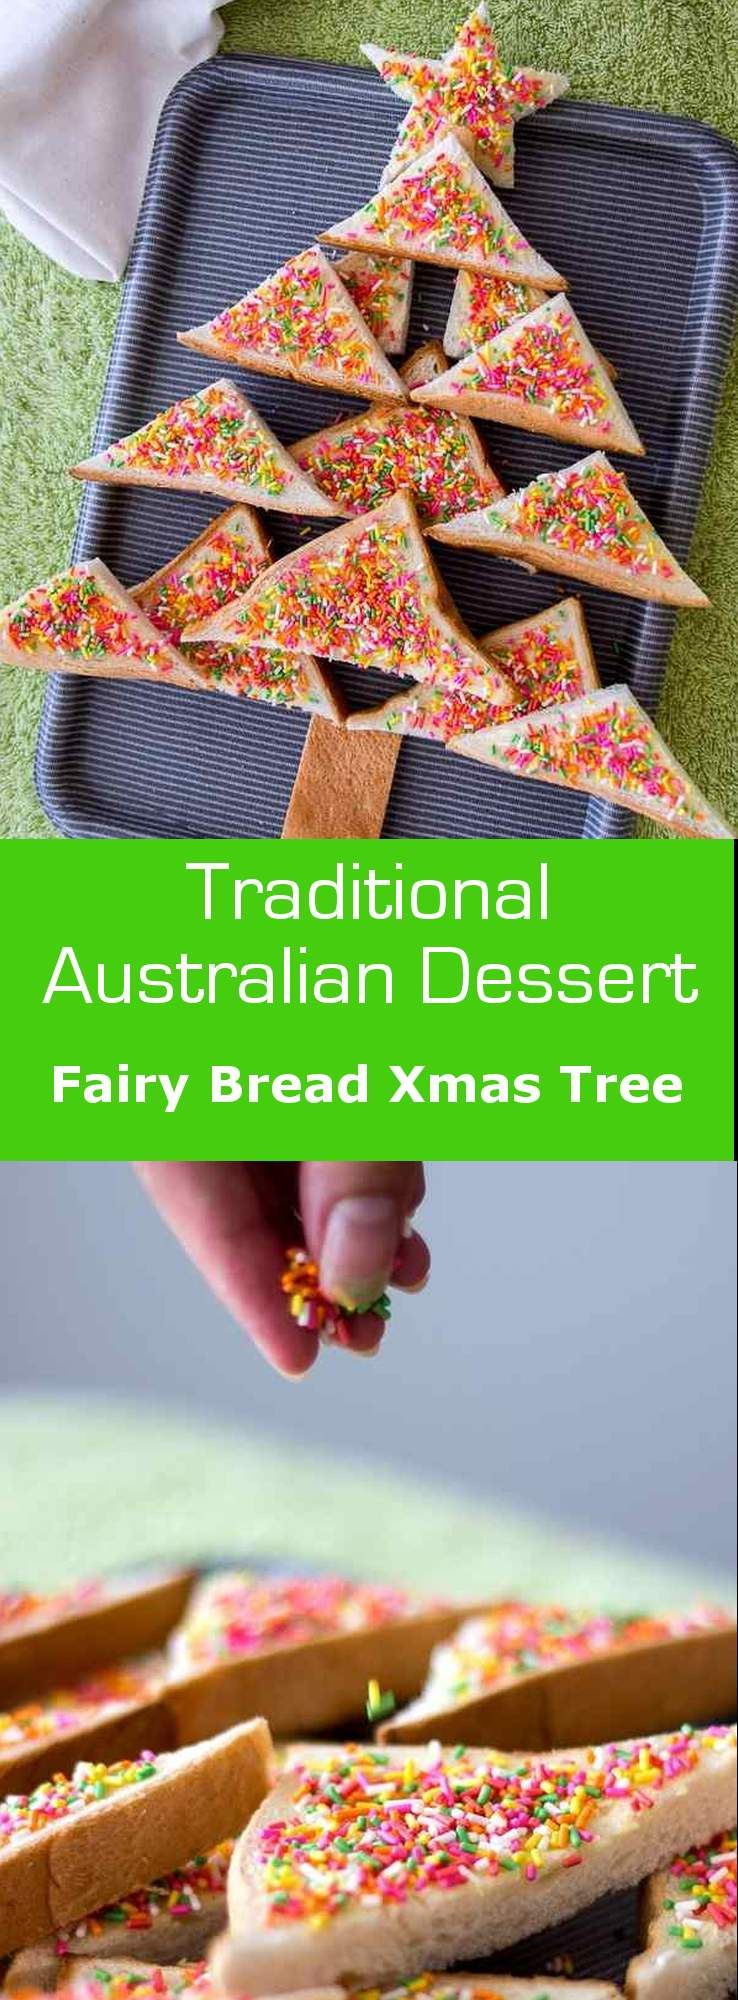 Christmas Food Gifts 2019
 Fairy bread Christmas tree is Australia’s favorite